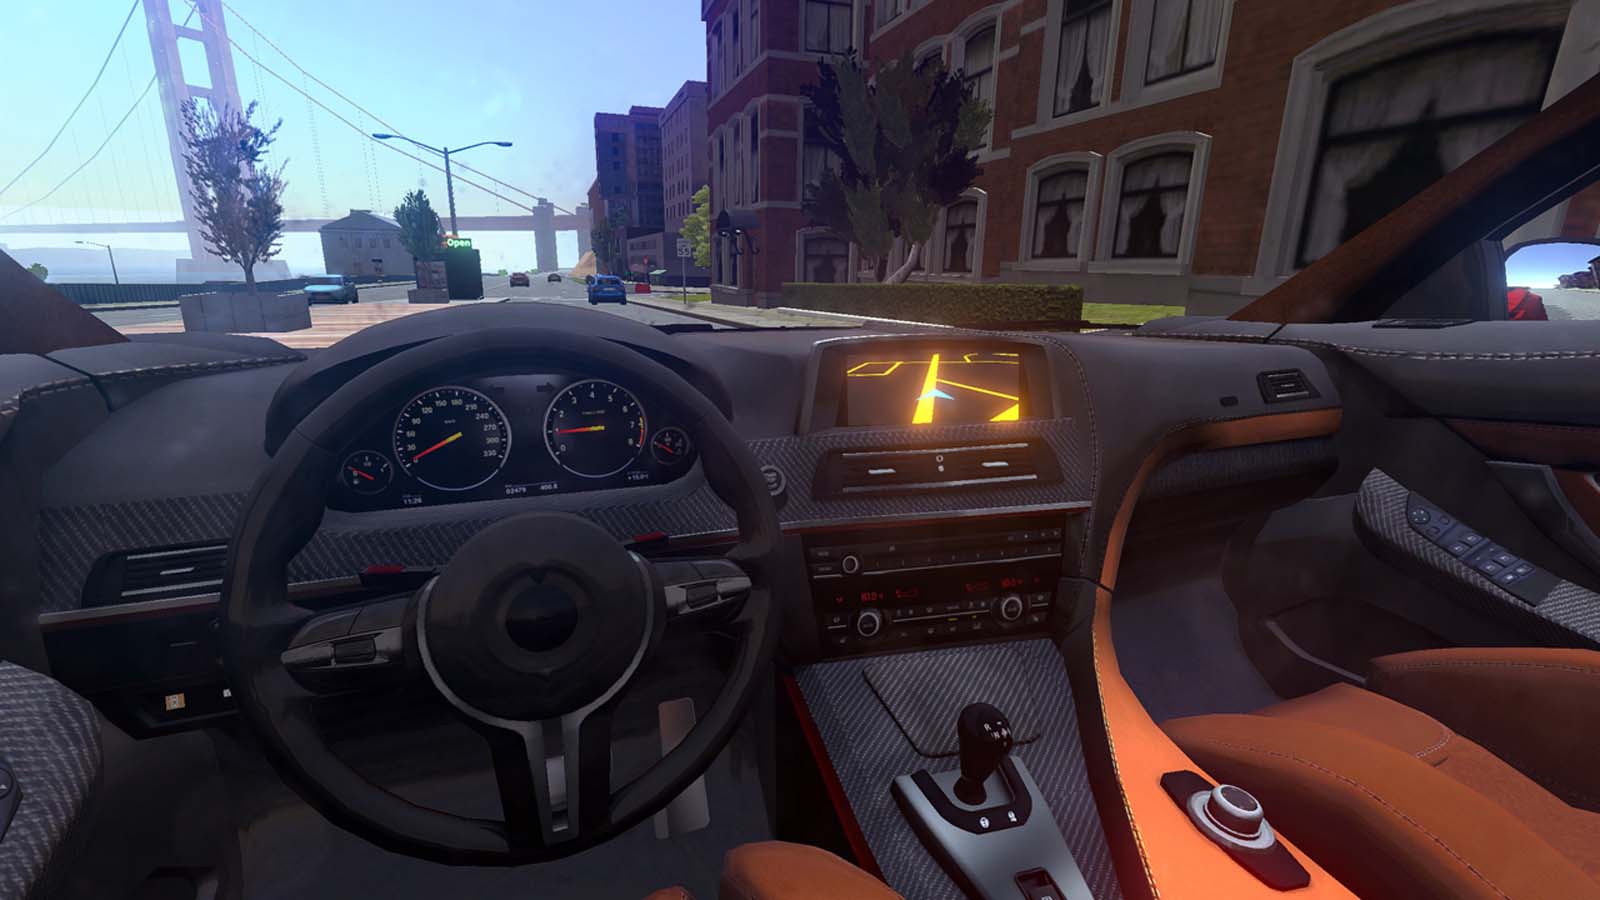 HonestGamers - Car Driving School Simulator (Switch)